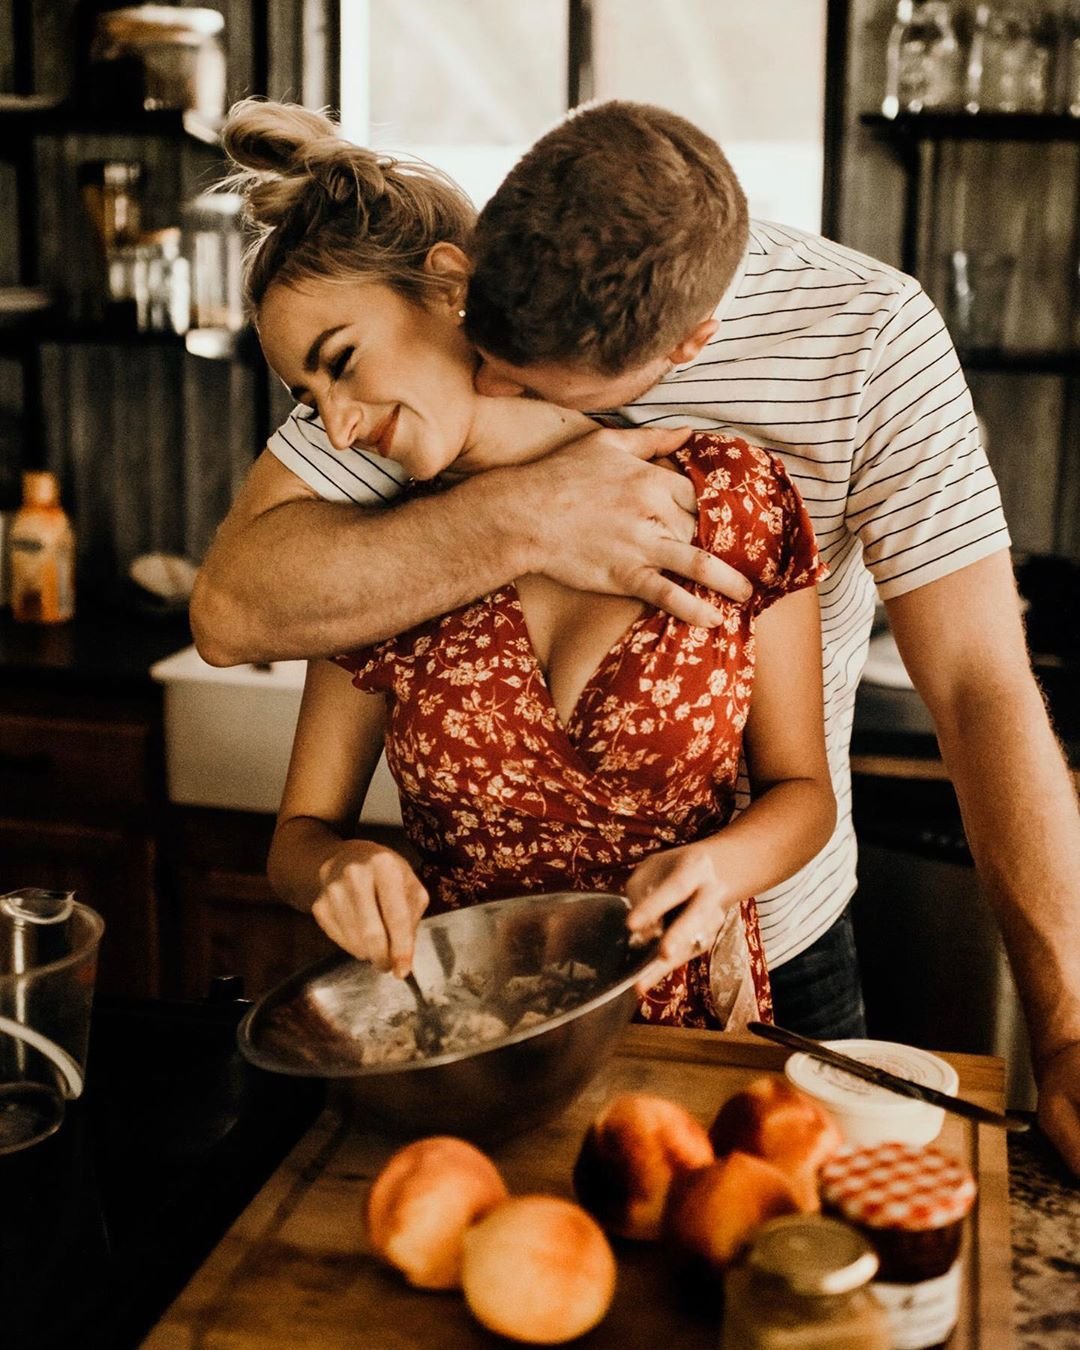 Loving wife stories. Влюбленные на кухне. Романтические поступки. Мужчина и женщина на кухне. Страсть на кухне.